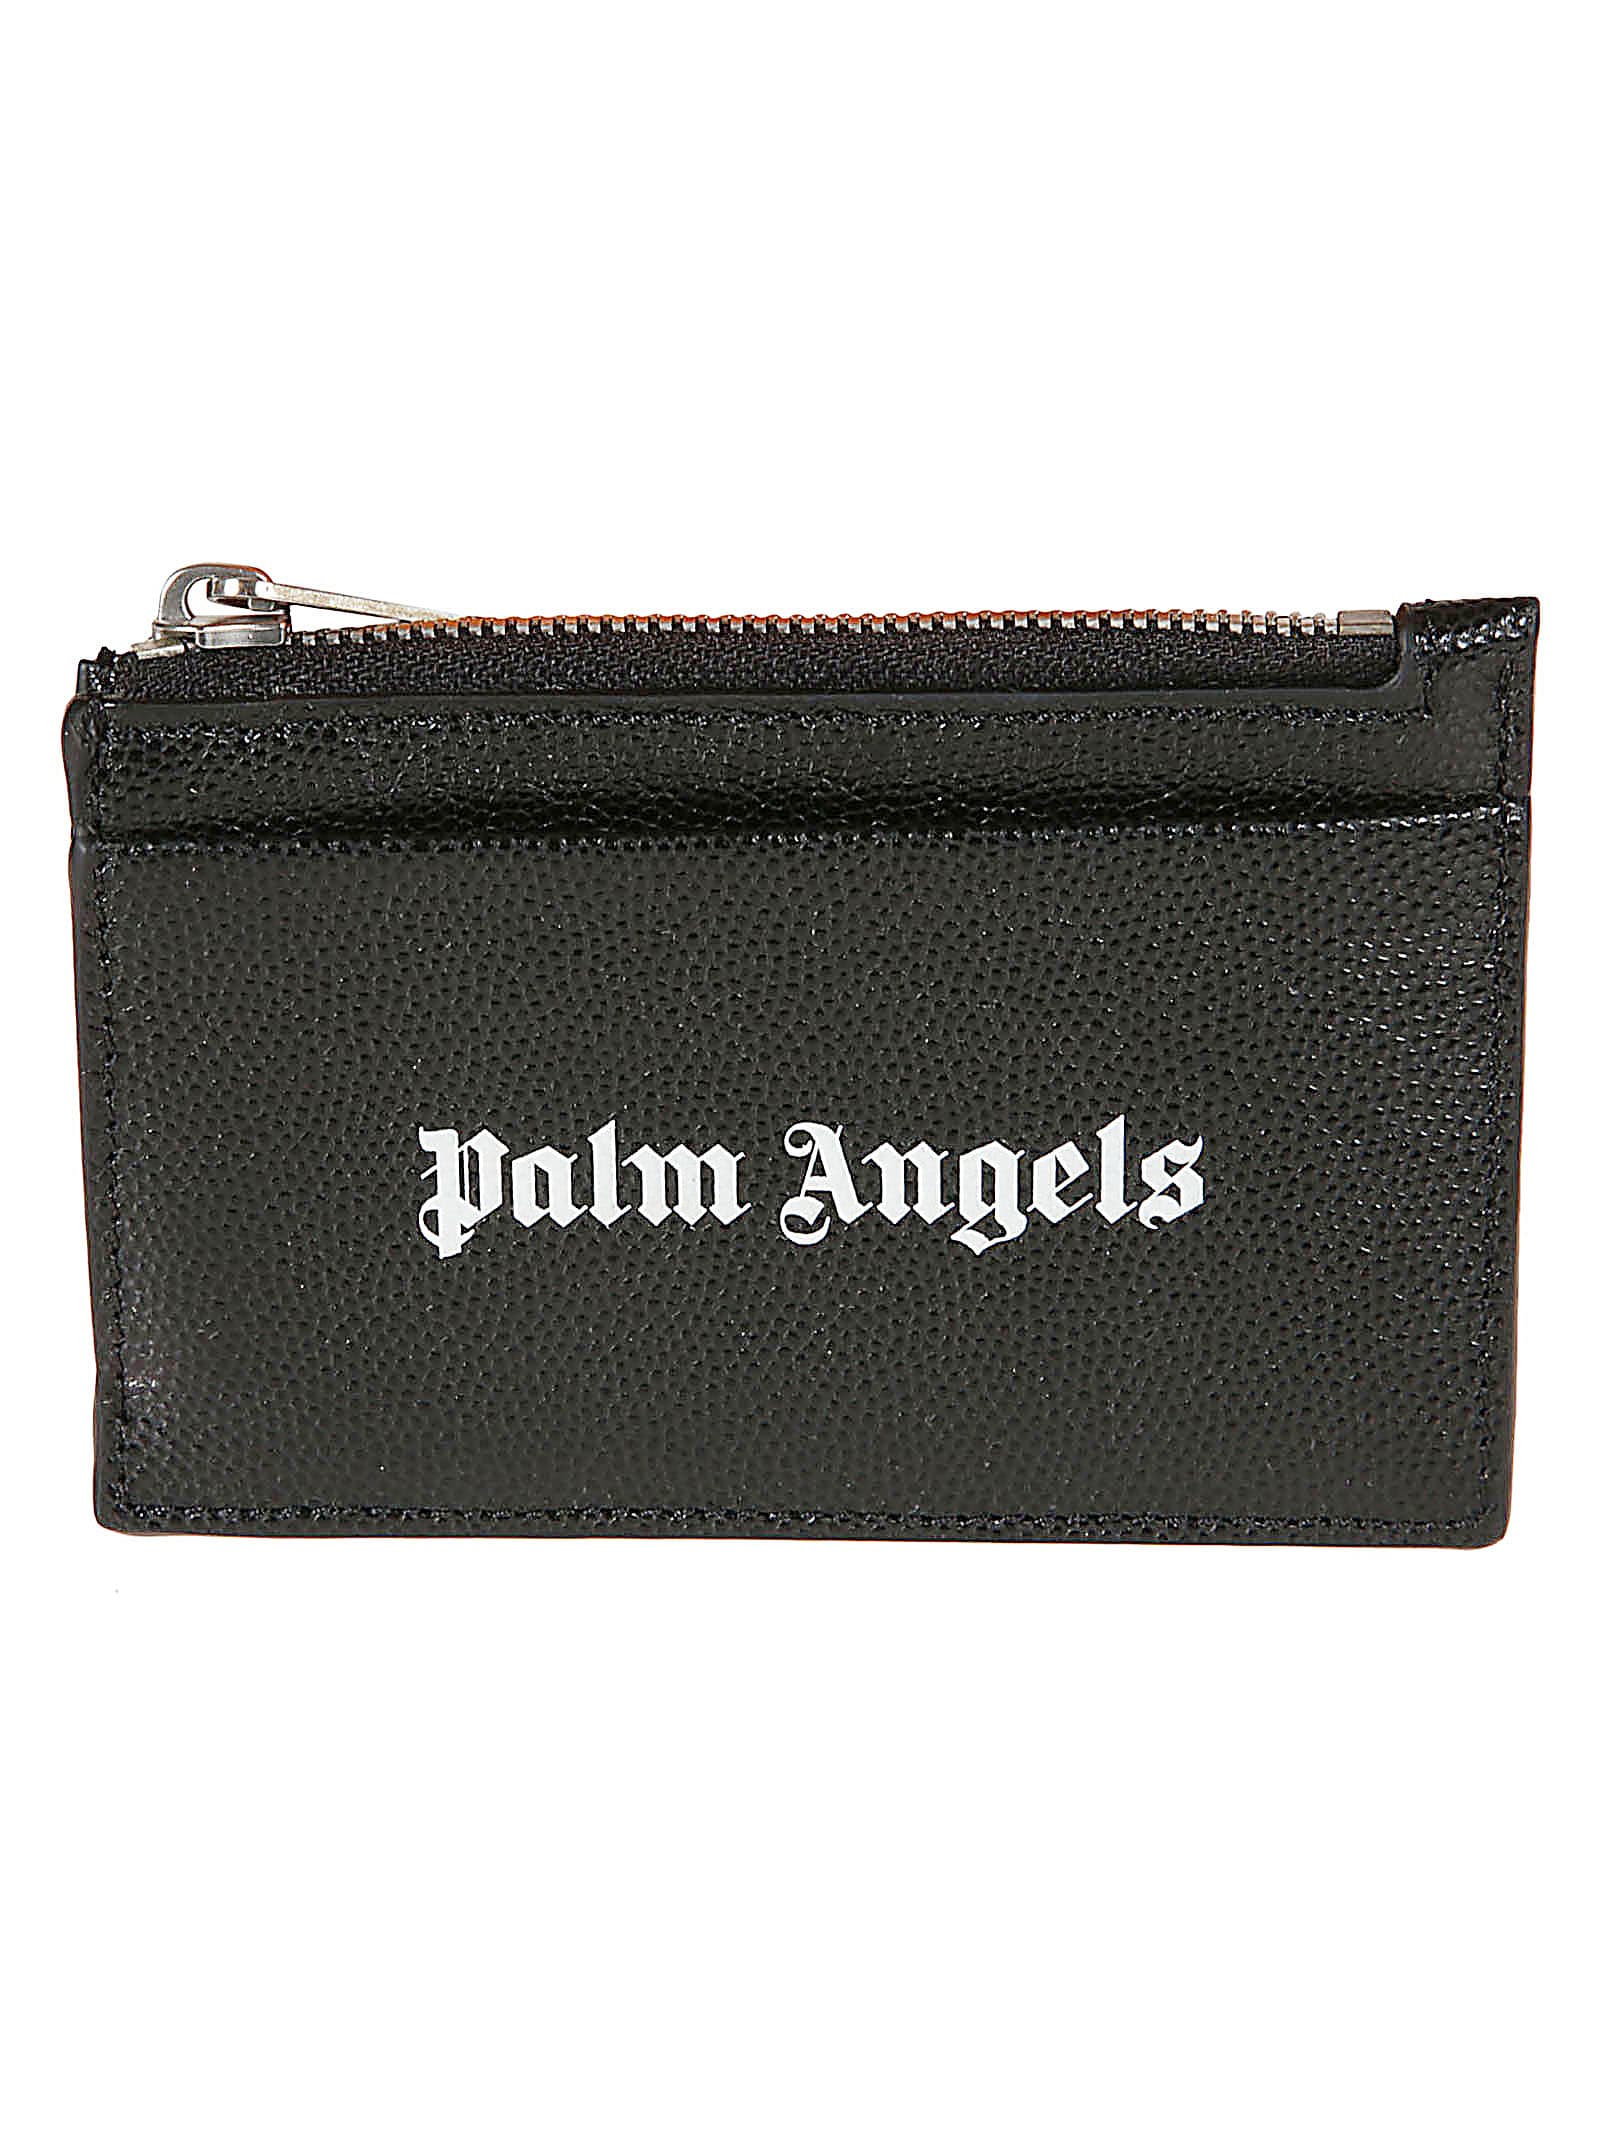 Palm Angels Zip Card Holder